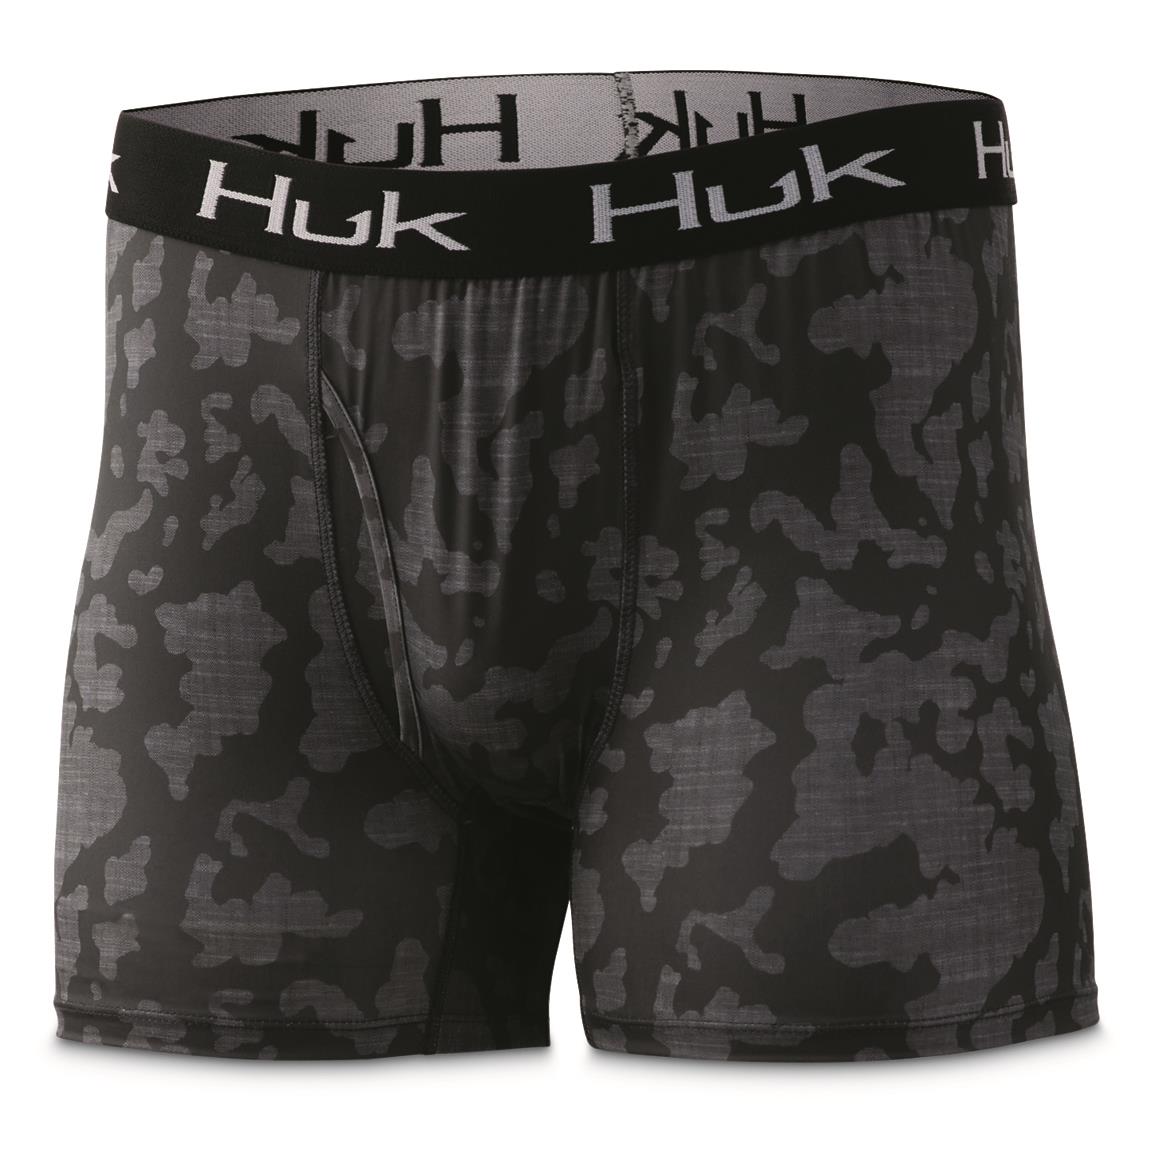 Huk Men's Running Lakes Boxer Briefs, Volcanic Ash